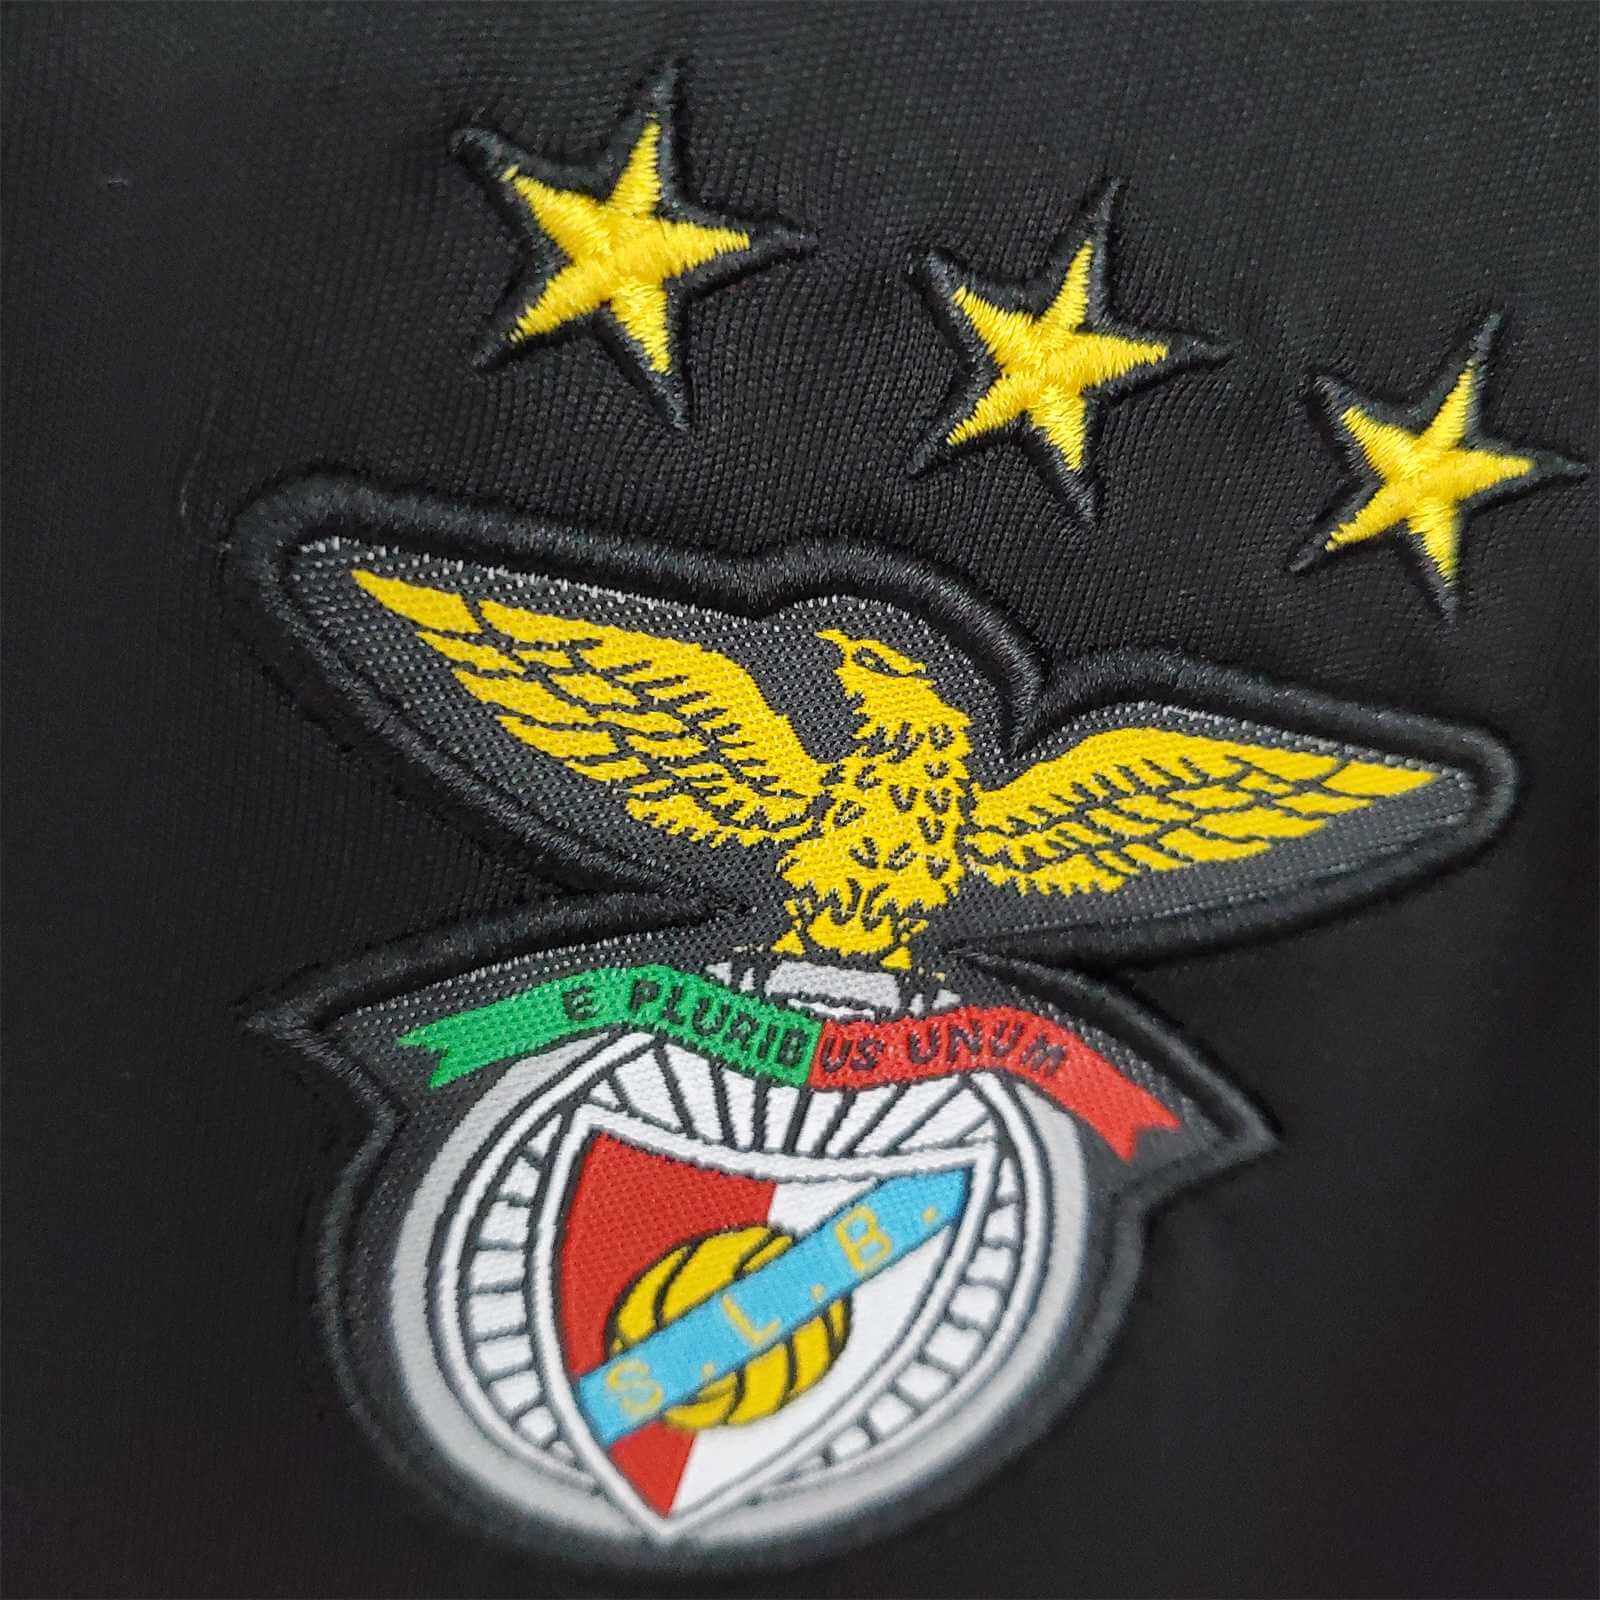 Benfica 2009/2010 Away kit – The Football Heritage